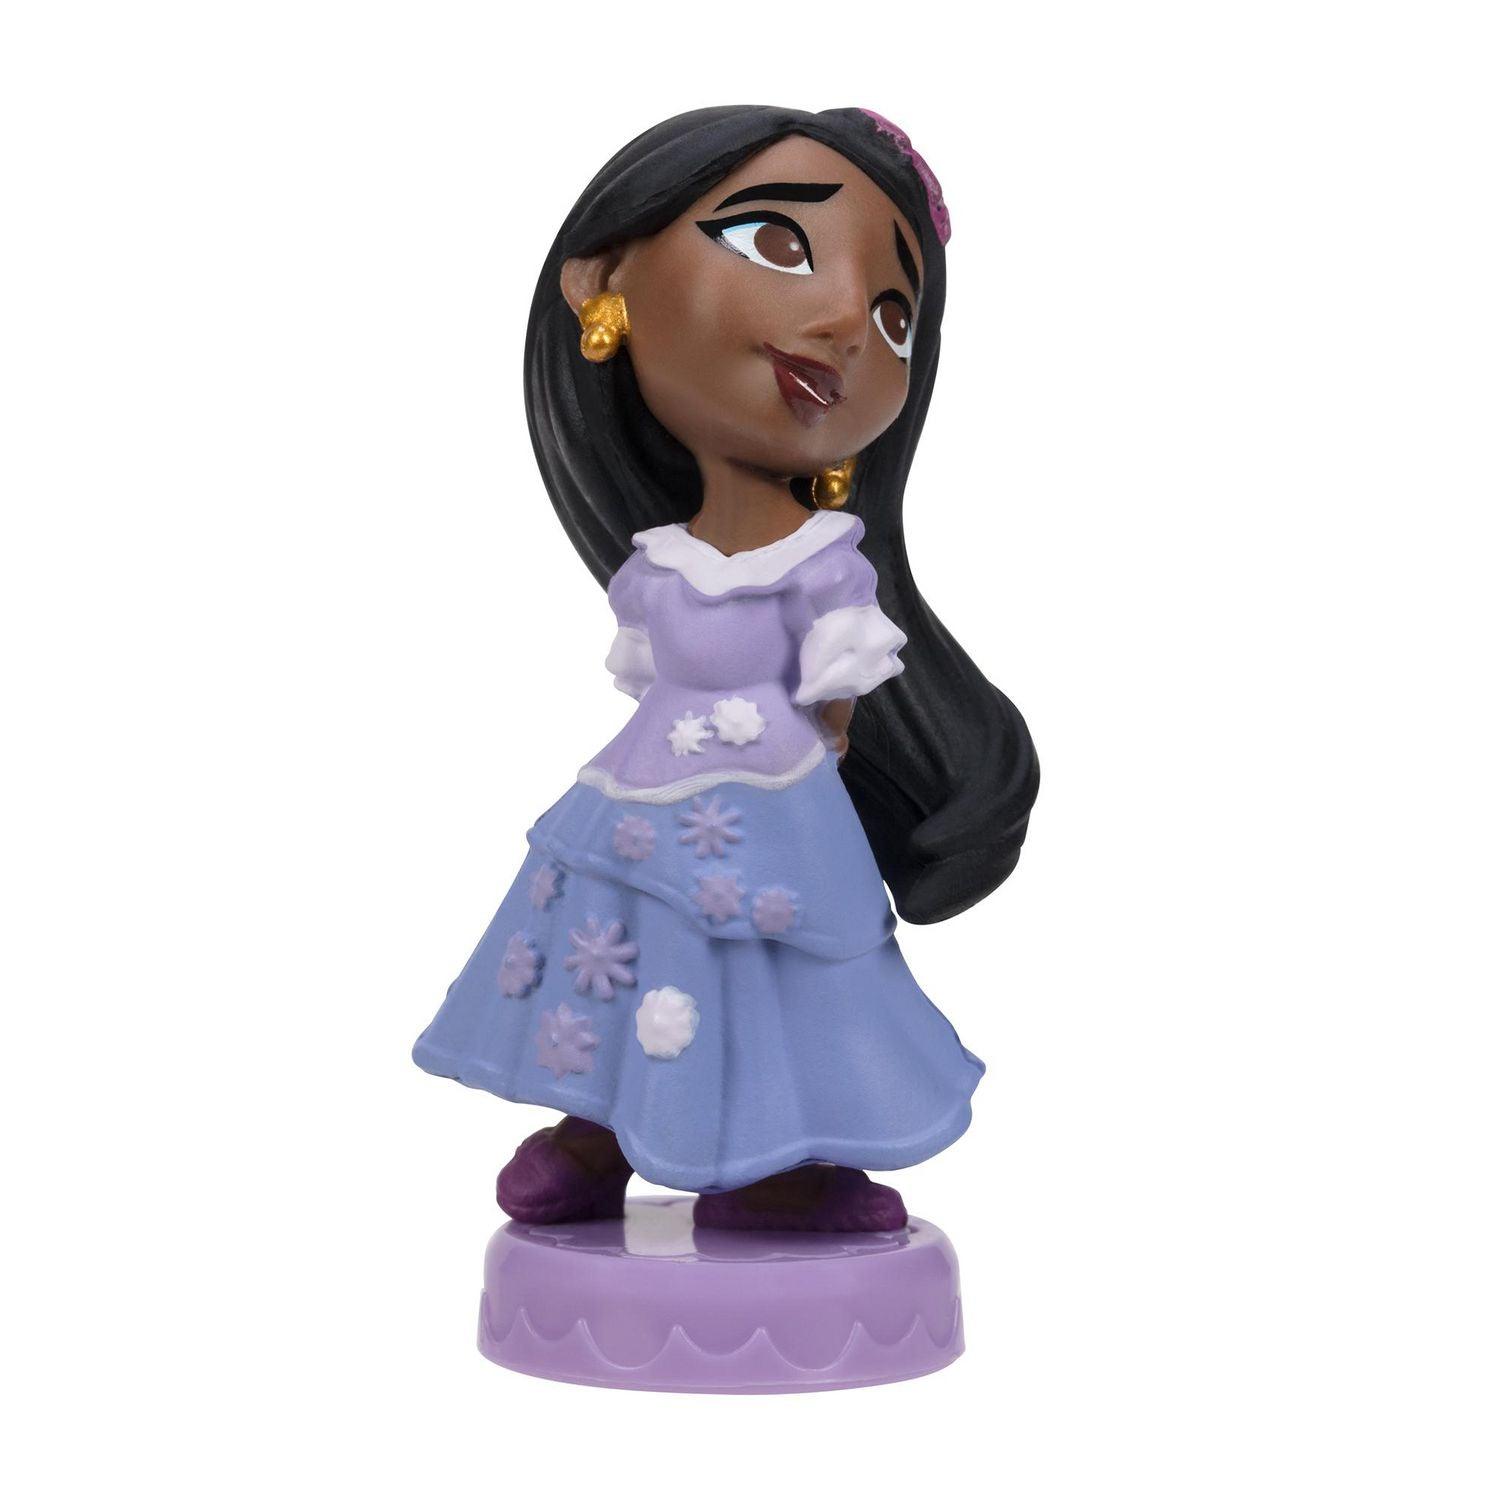 Disney Encanto Mi Familia 1.5" 12 Figurine Set - Jakks Pacific - Ginga Toys